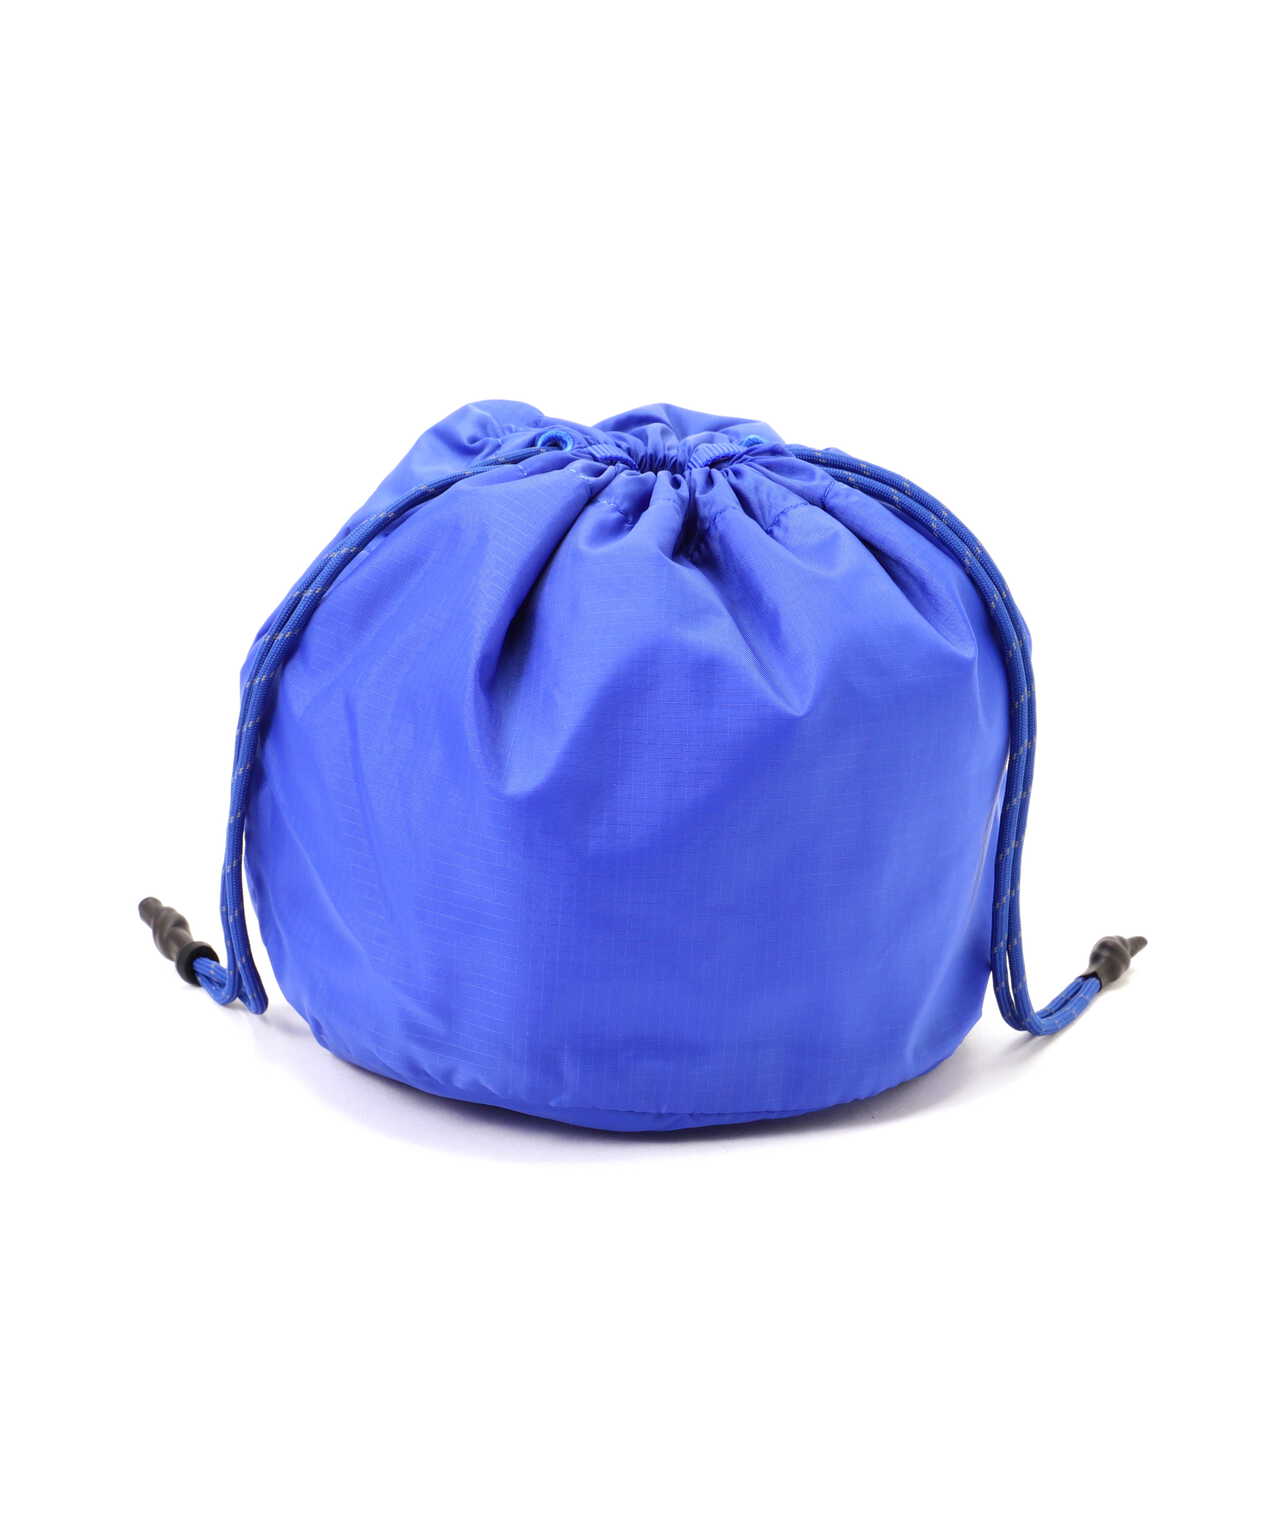 Topologie/トポロジー Wares Bags Reversible Bucket | BEAVER 